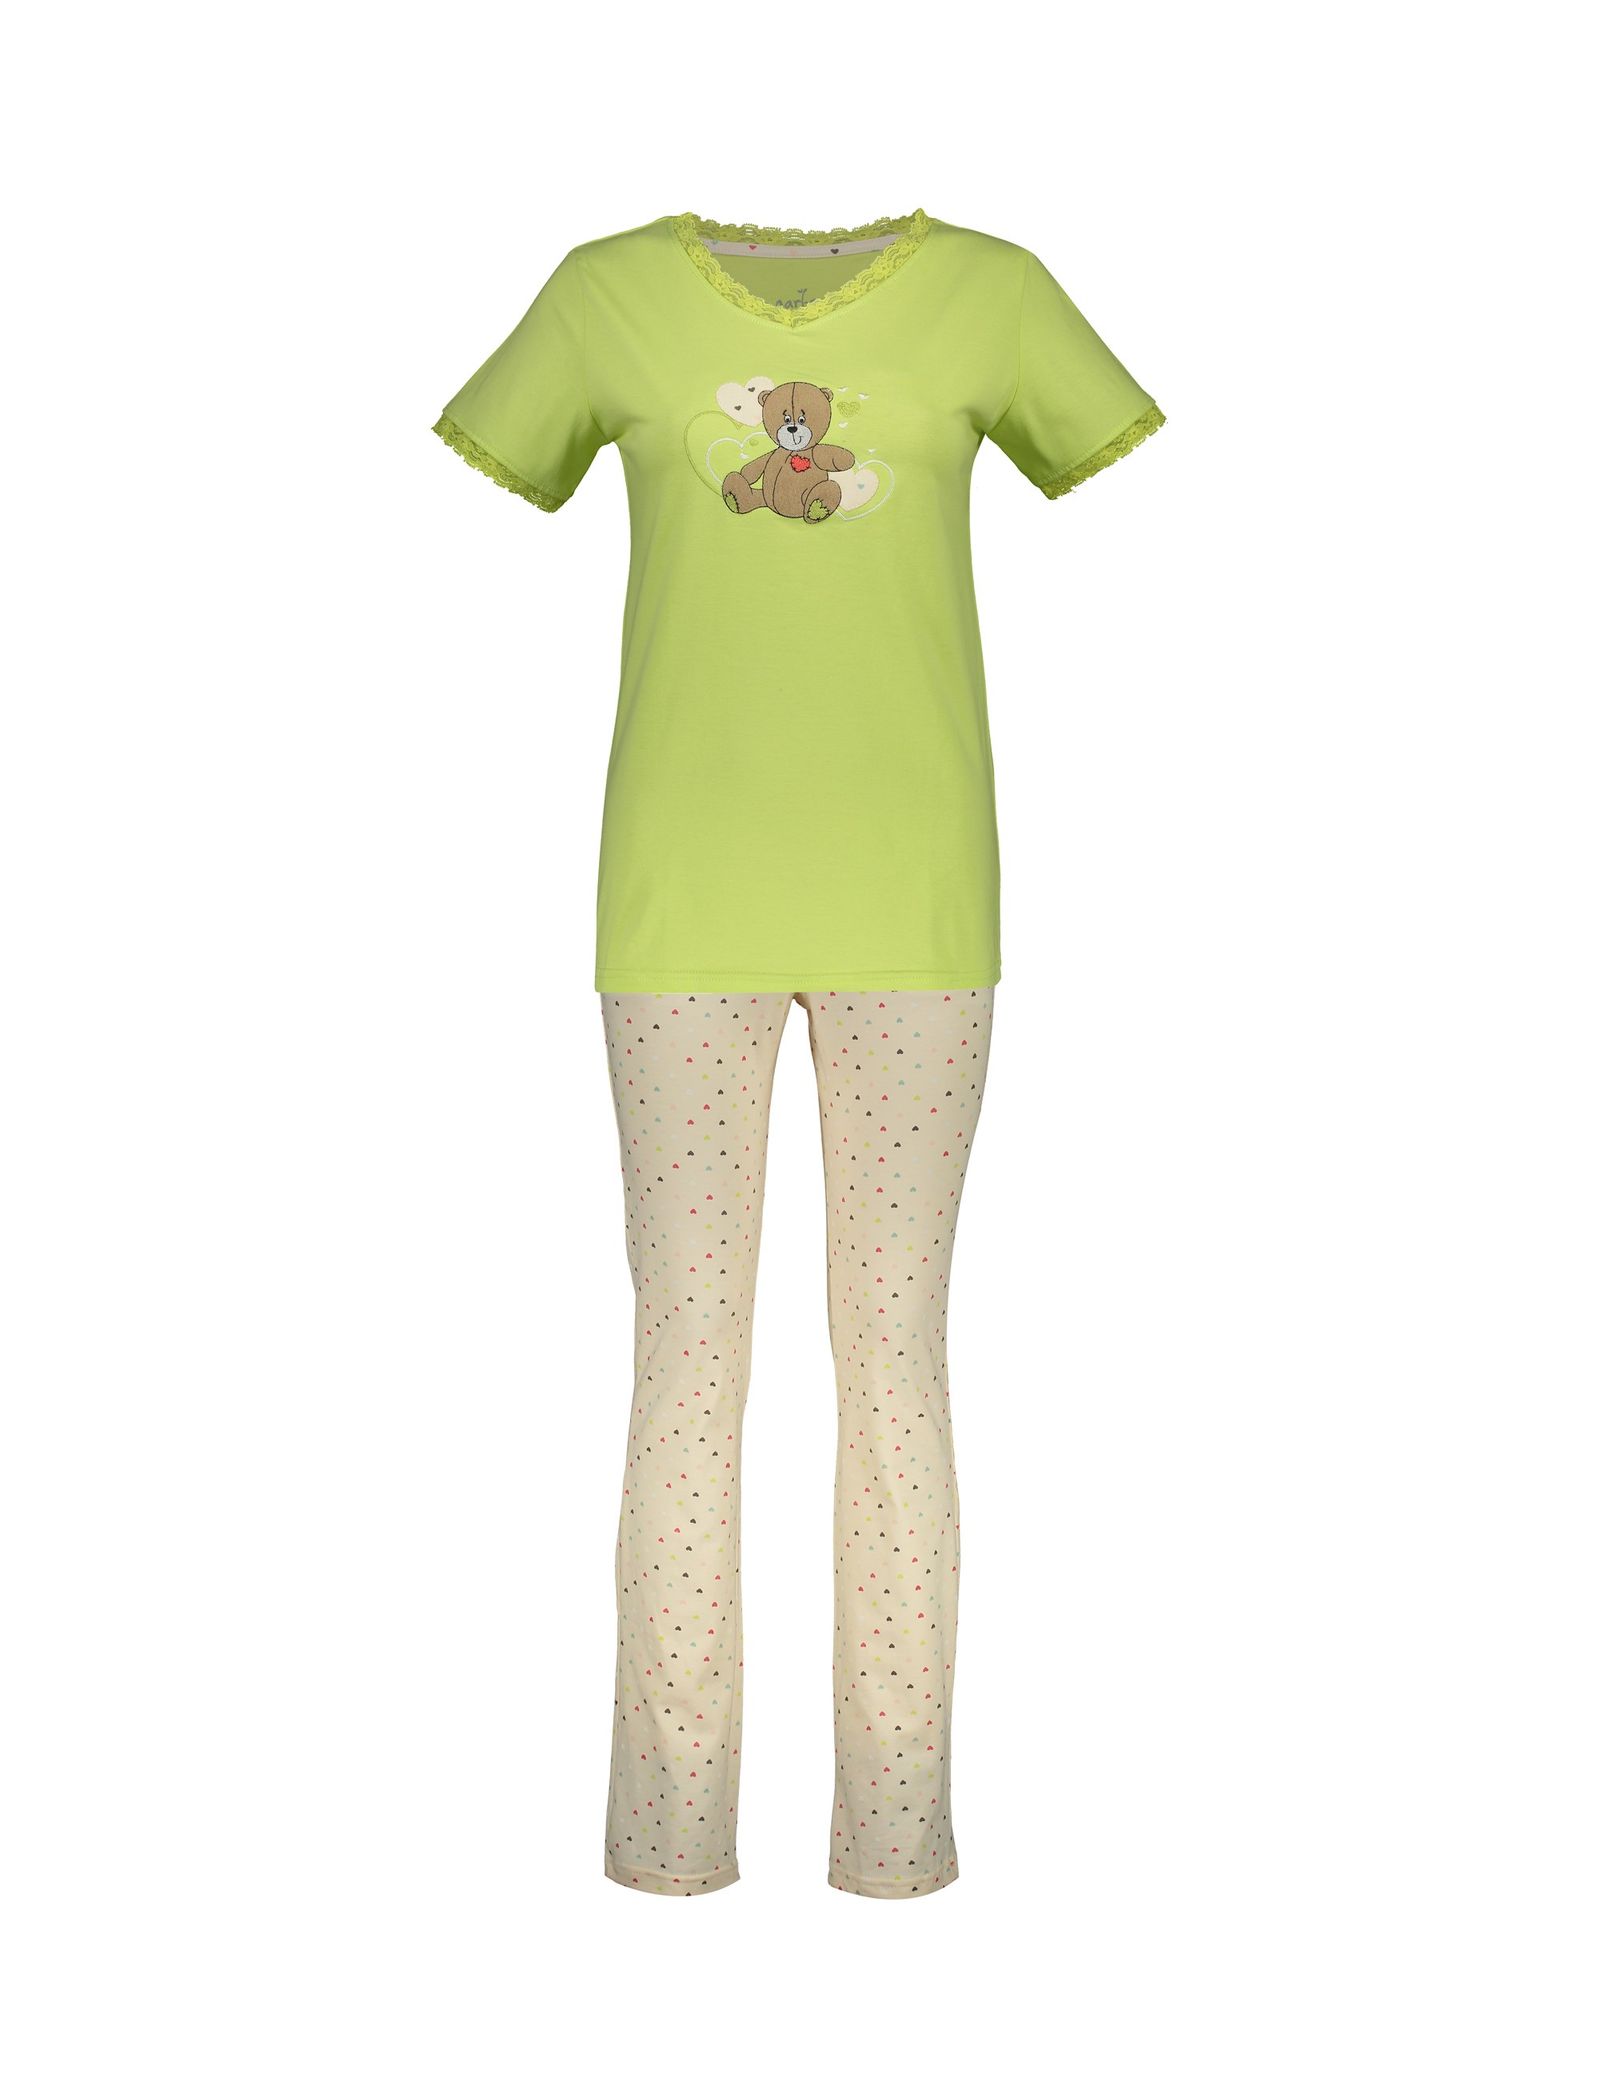 تی شرت و شلوار نخی زنانه خرس مهربان - ناربن - سبز - 1